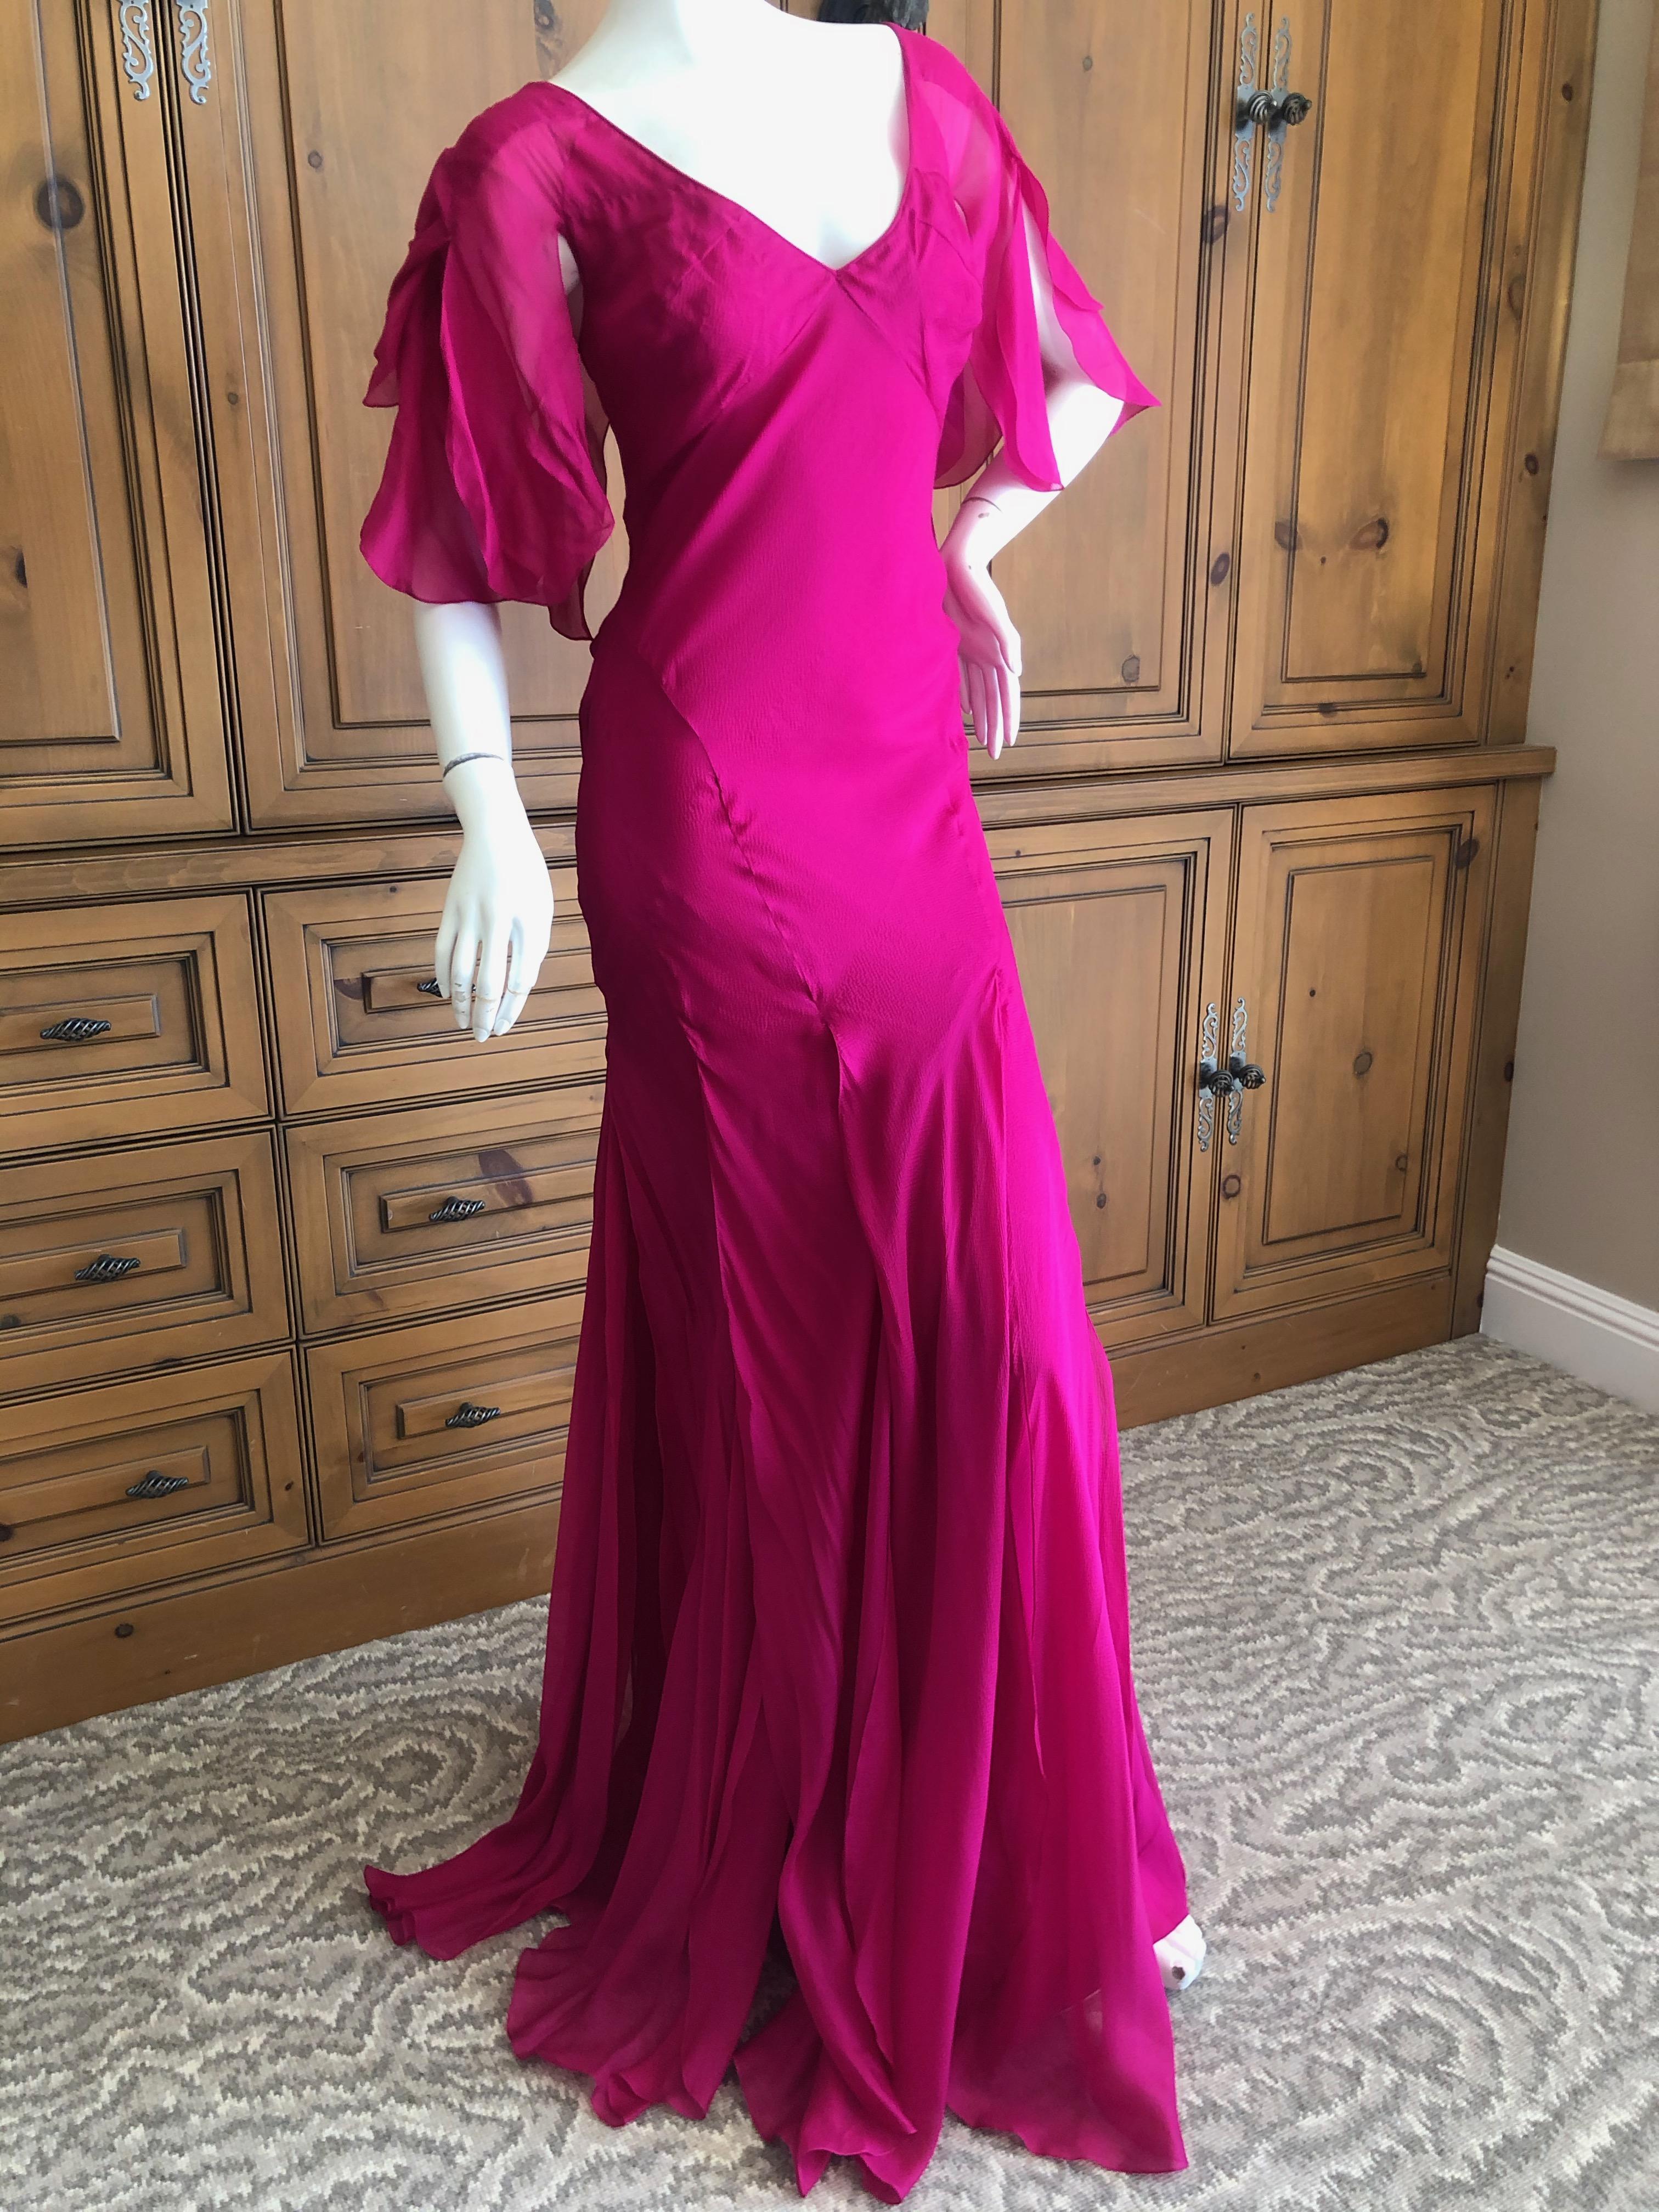   John Galliano Vintage Bias Cut Hot Pink Silk Evening Dress Hard to find Sz 46 1